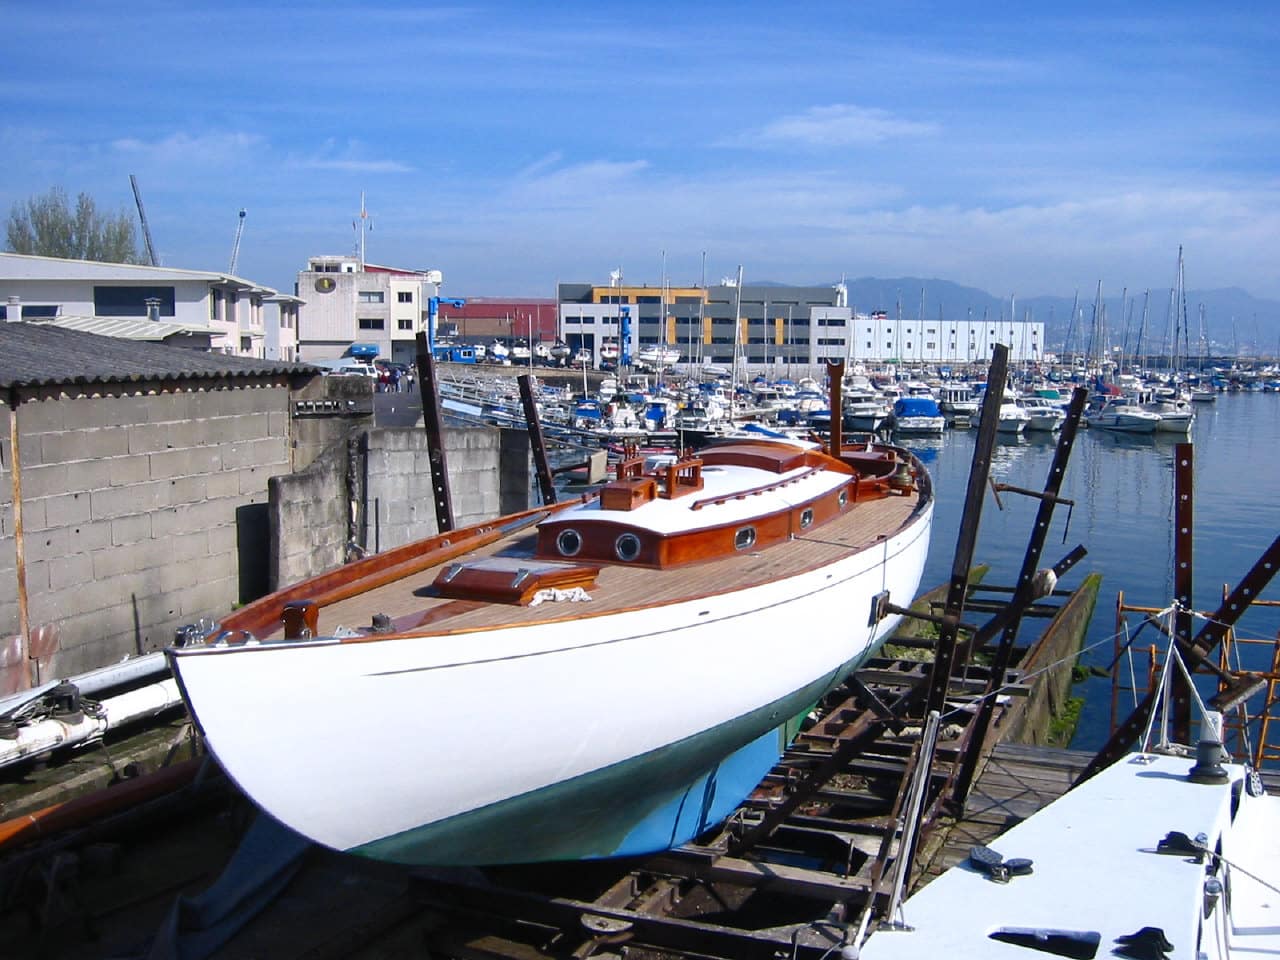 Restoration of Frers classic sailing boat